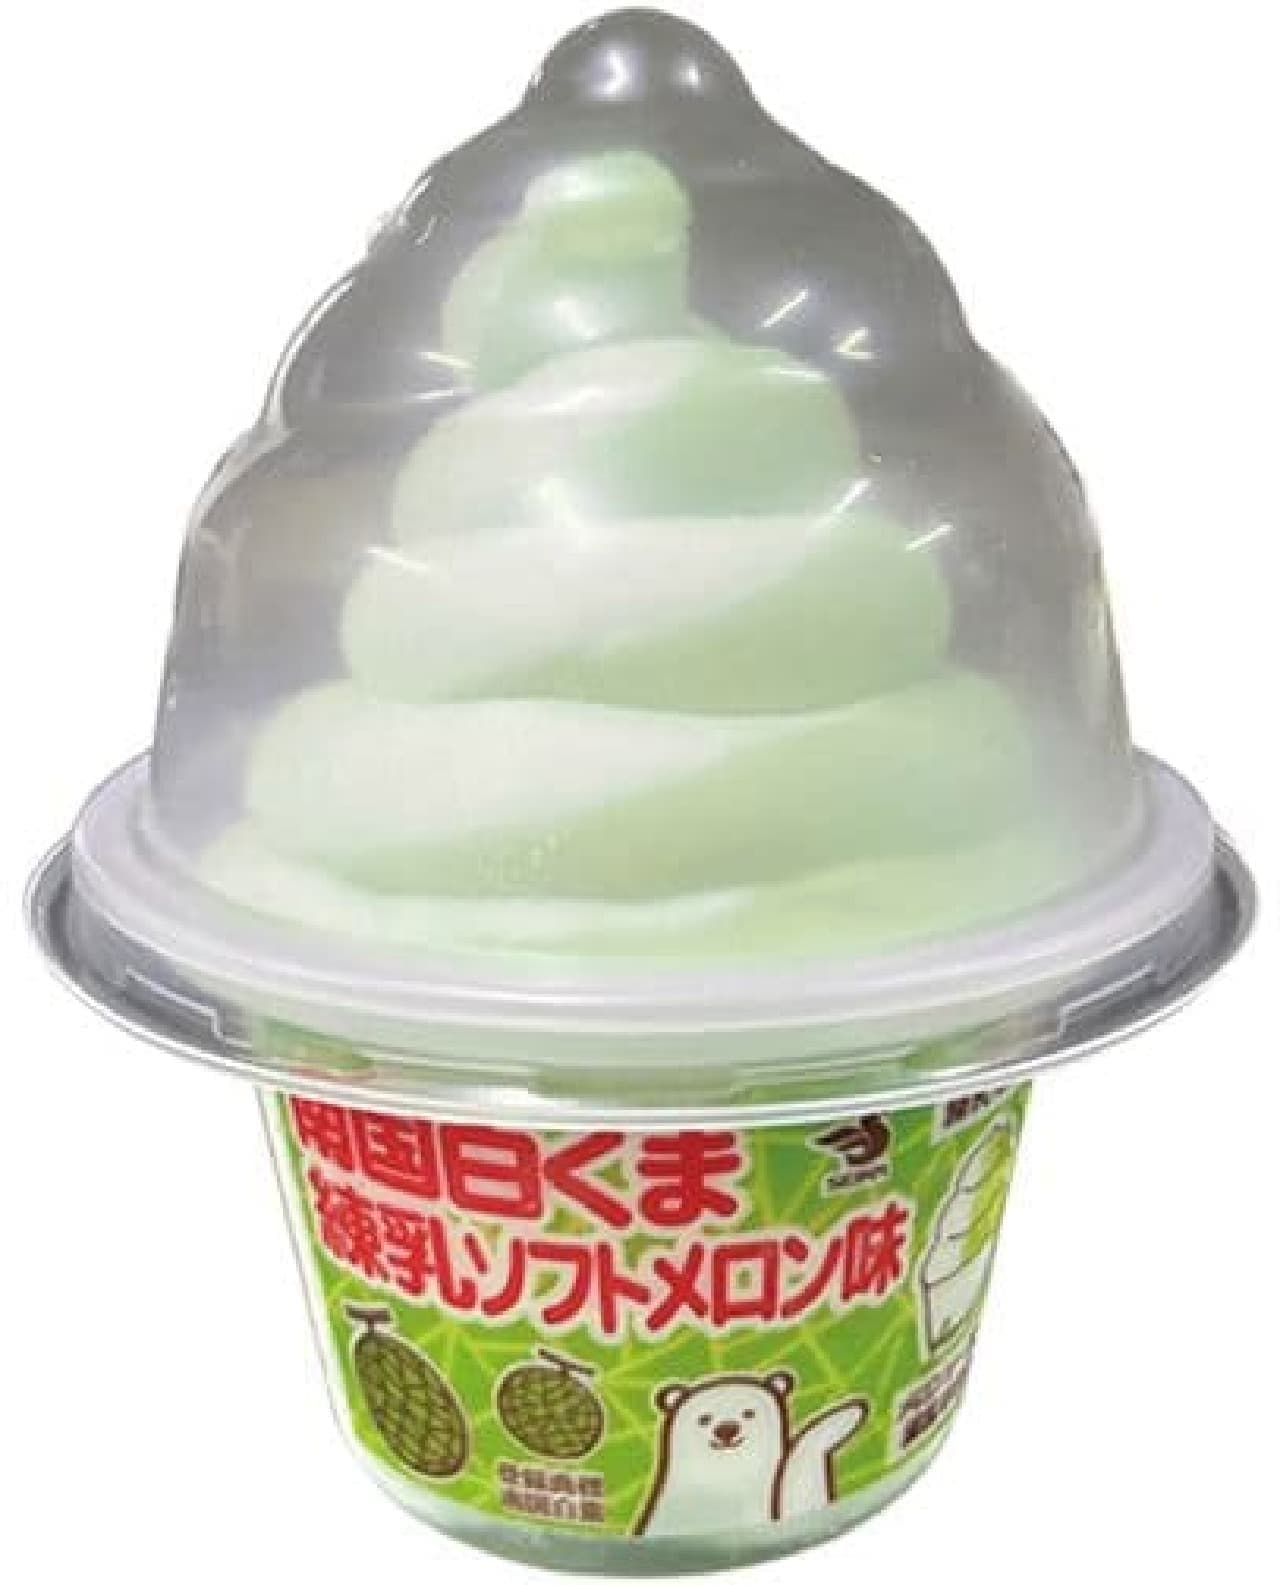 FamilyMart "Seika Tropical White Condensed Milk Soft Melon Flavor